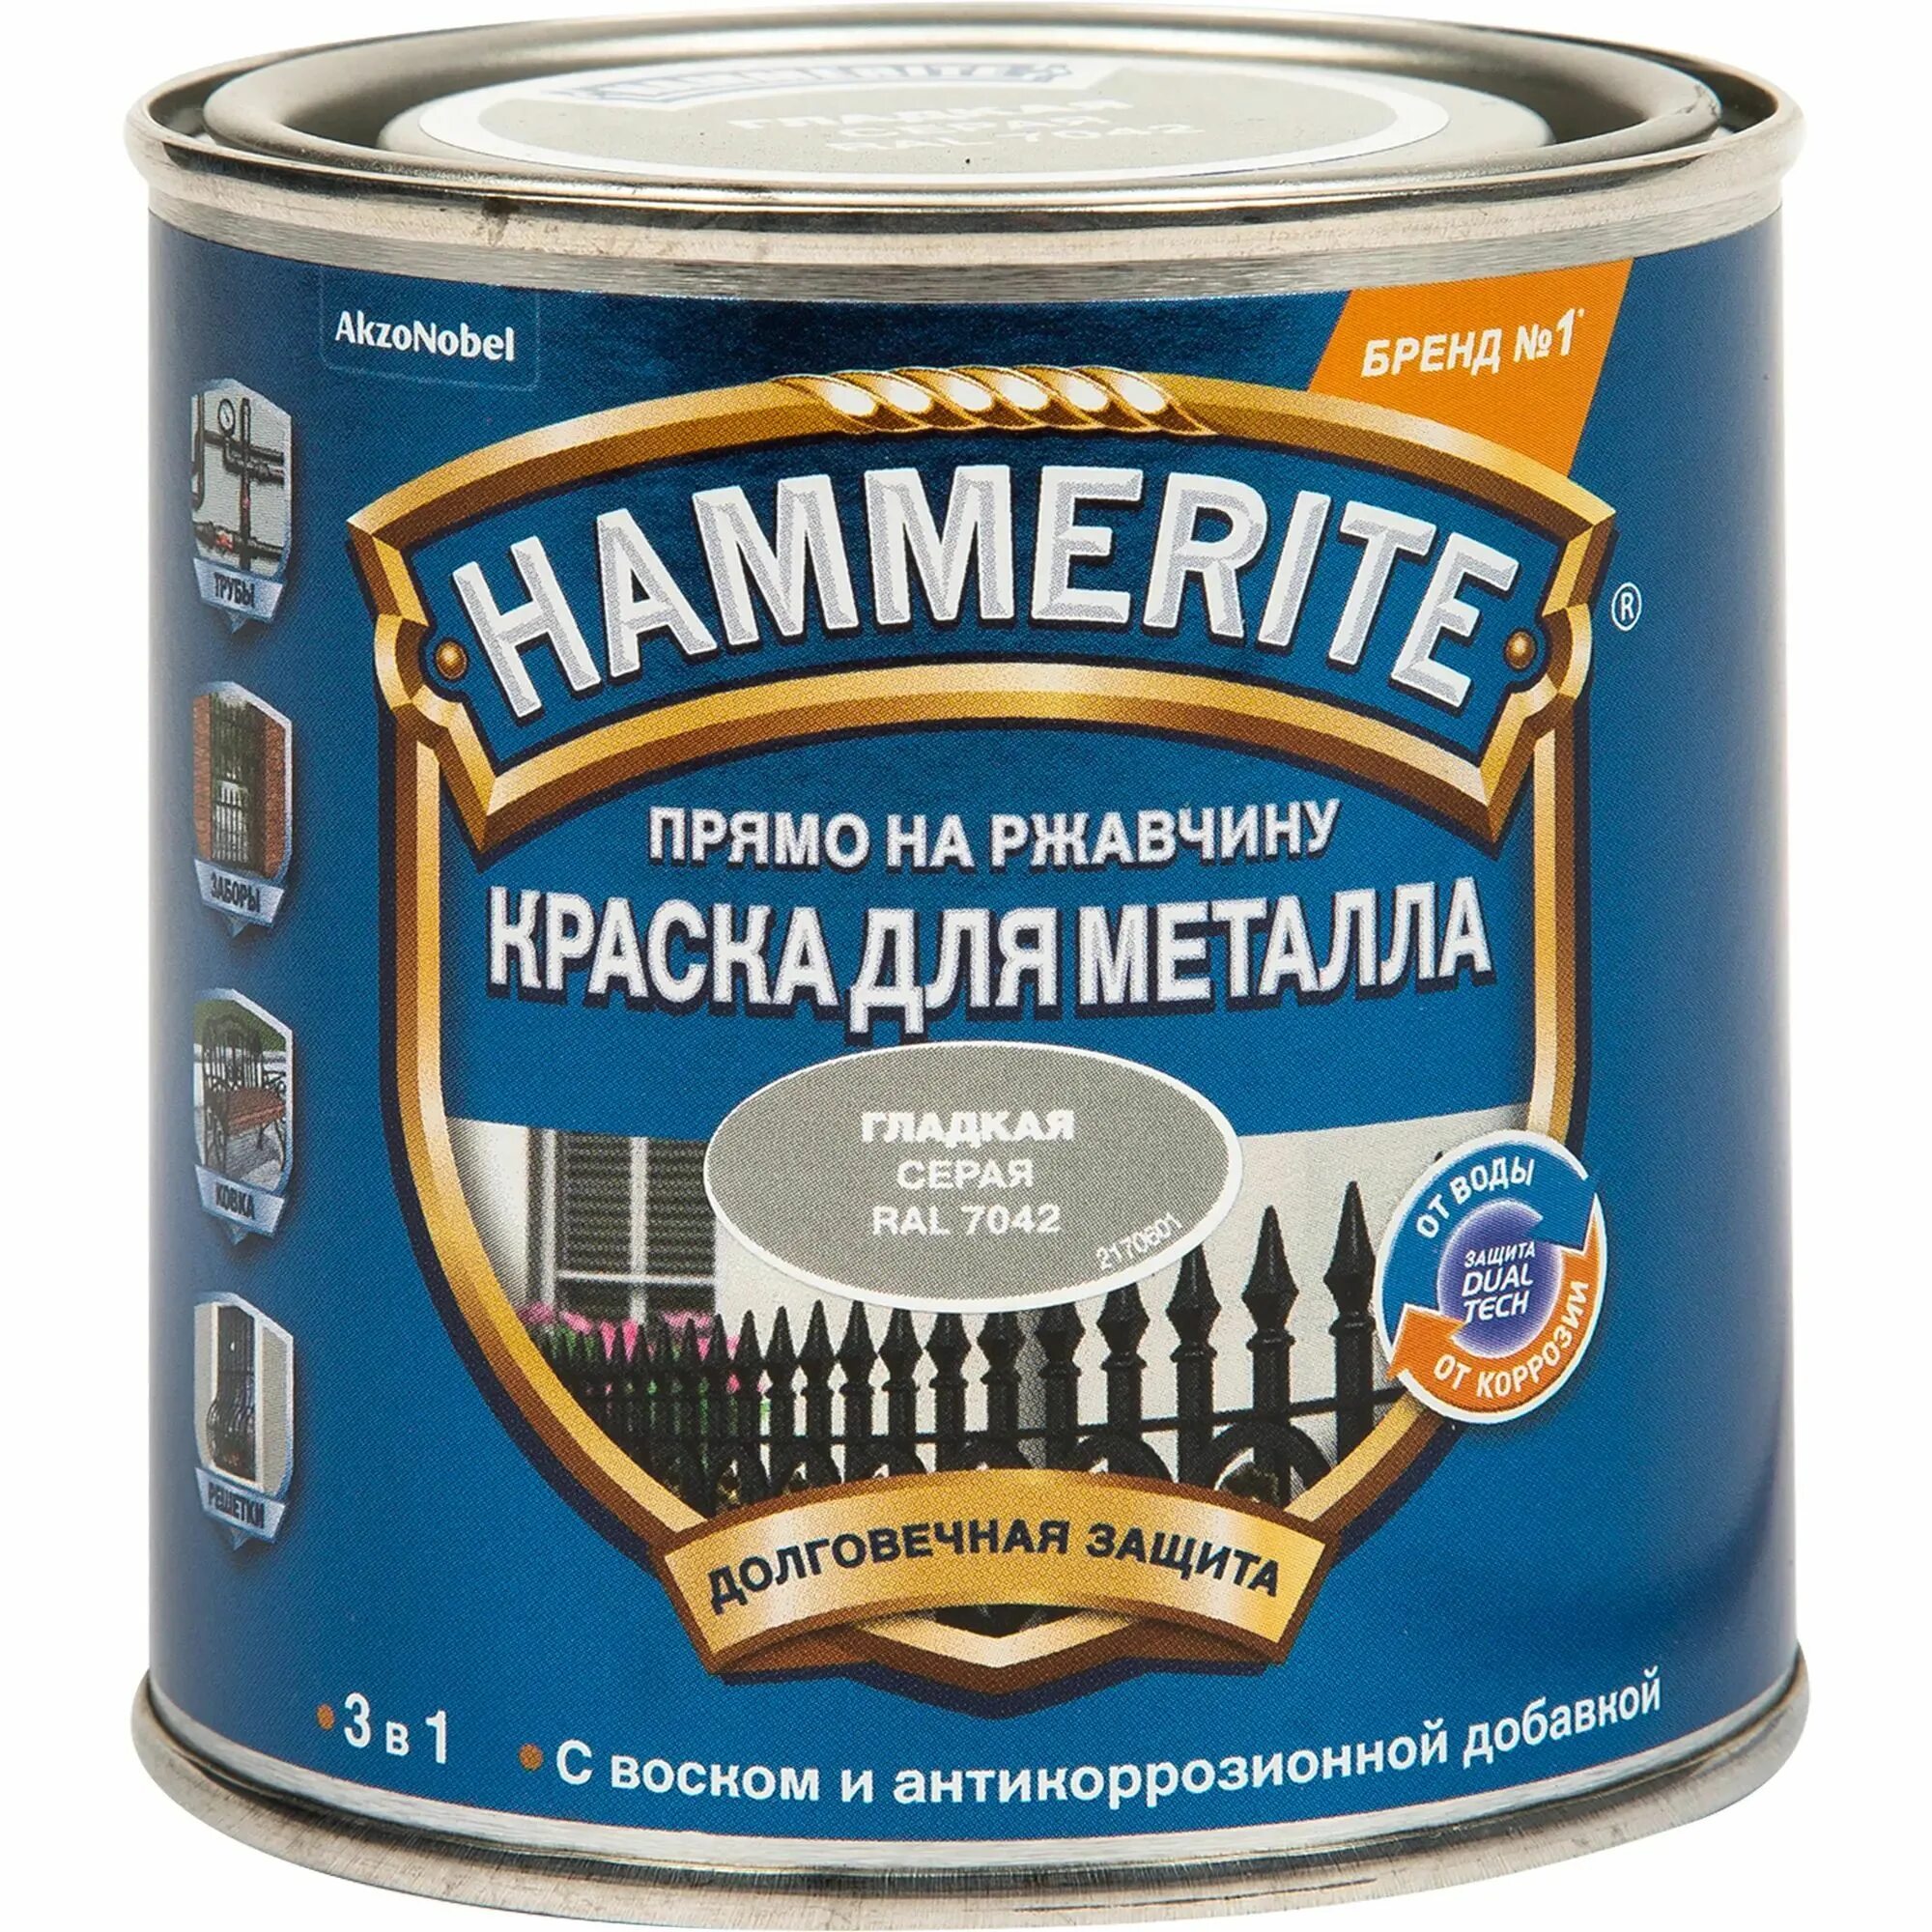 Hammerite цвет серый. Hammerite 5093763. Хамерайт эмаль серая. Краска Hammerite молотковая темно синяя. Hammerite по ржавчине